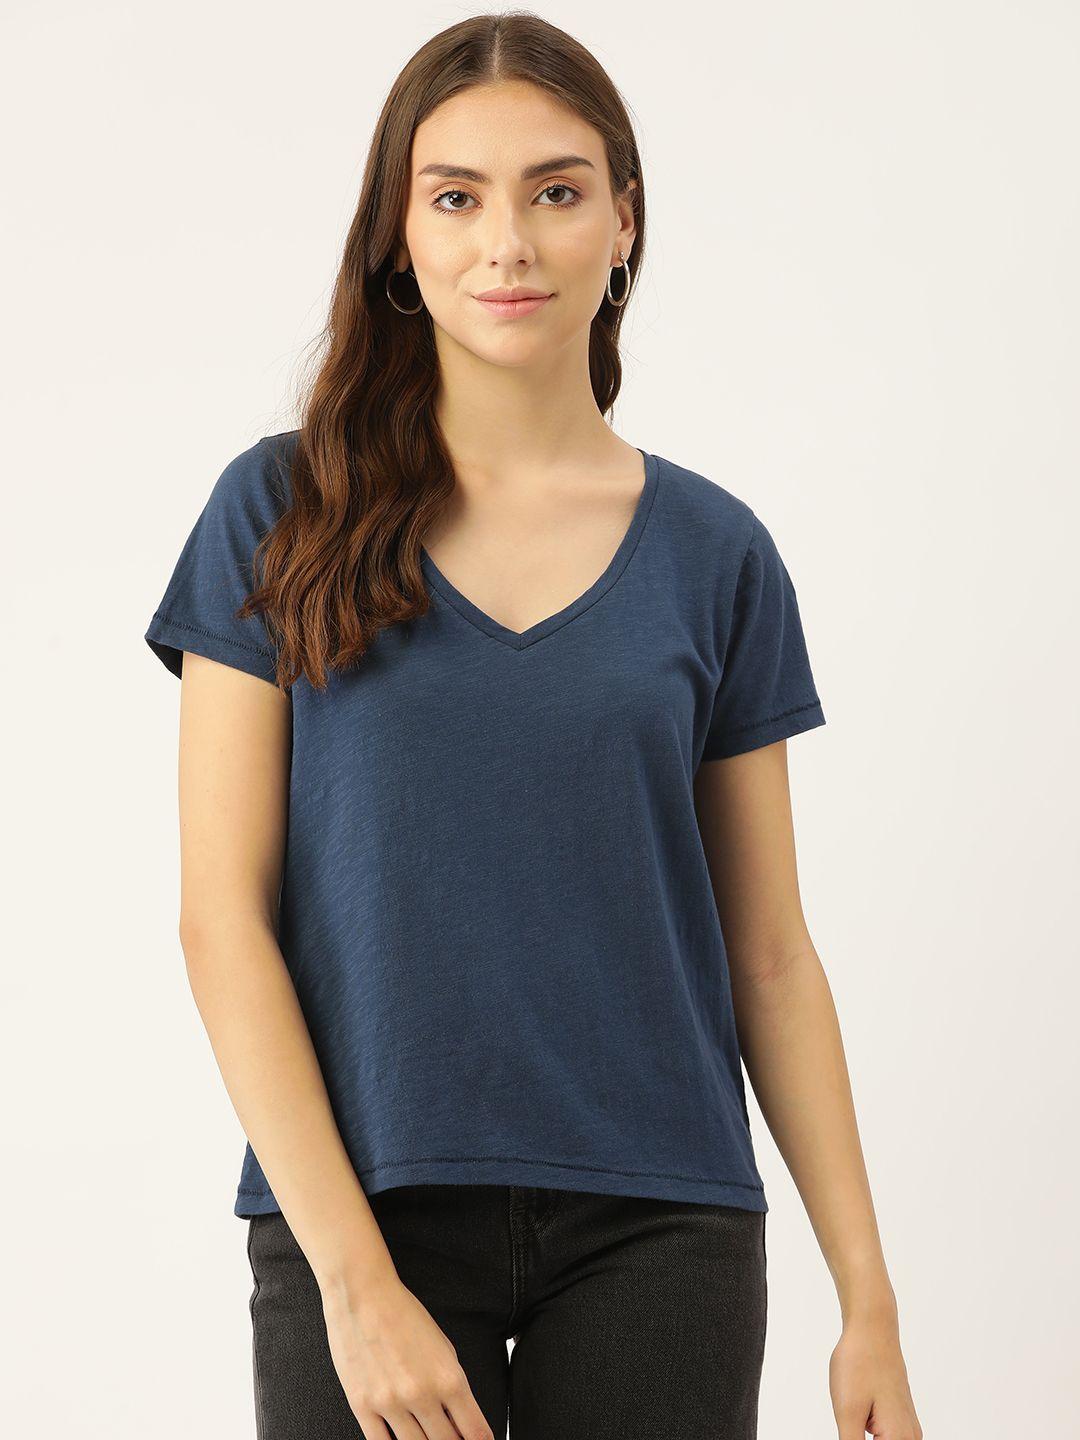 pirko women navy blue solid cotton v-neck t-shirt